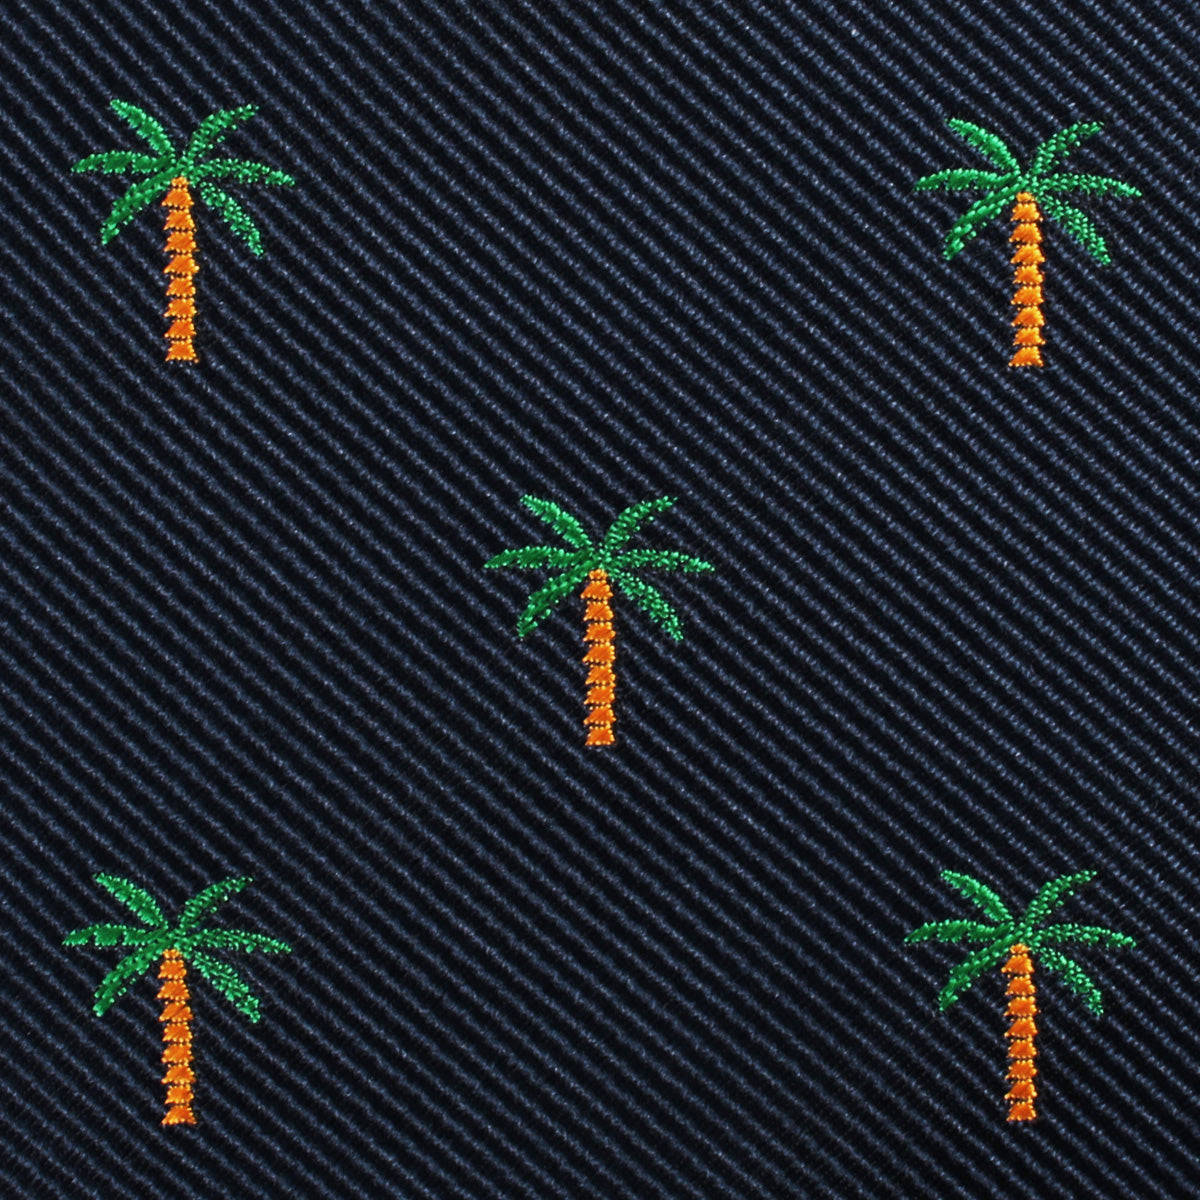 Aitutaki Palm Tree Kids Bow Tie Fabric